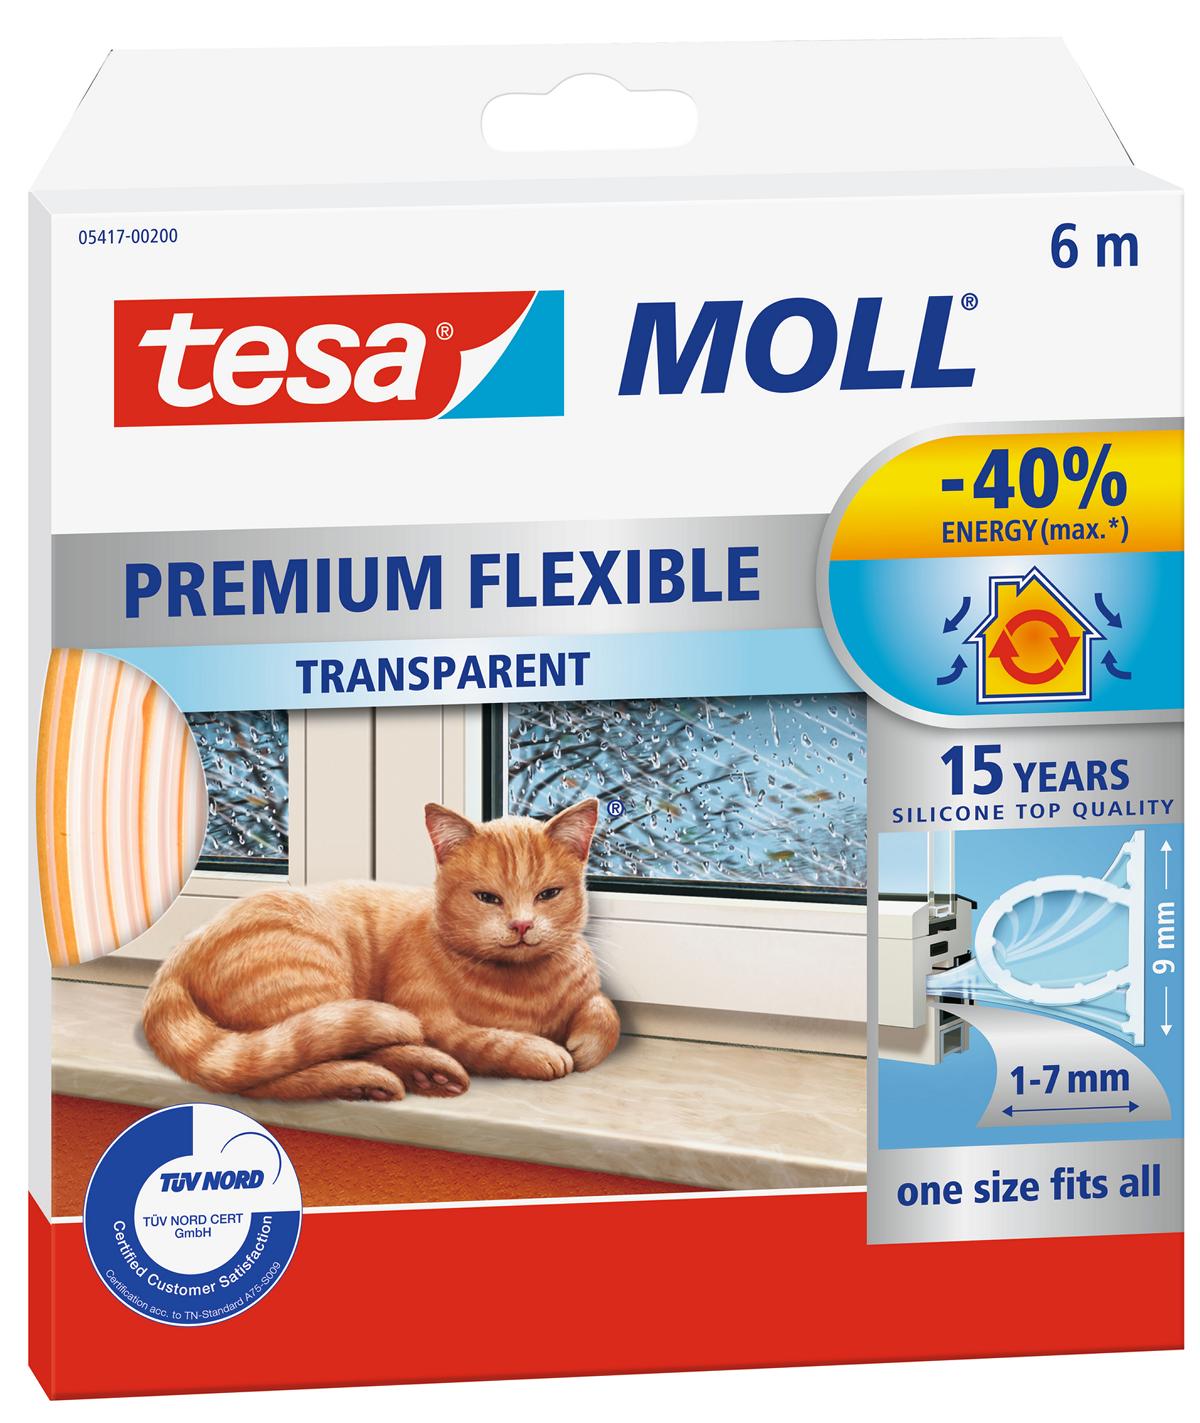 tesa Premium Flexible tesamoll, transparent, 6 m